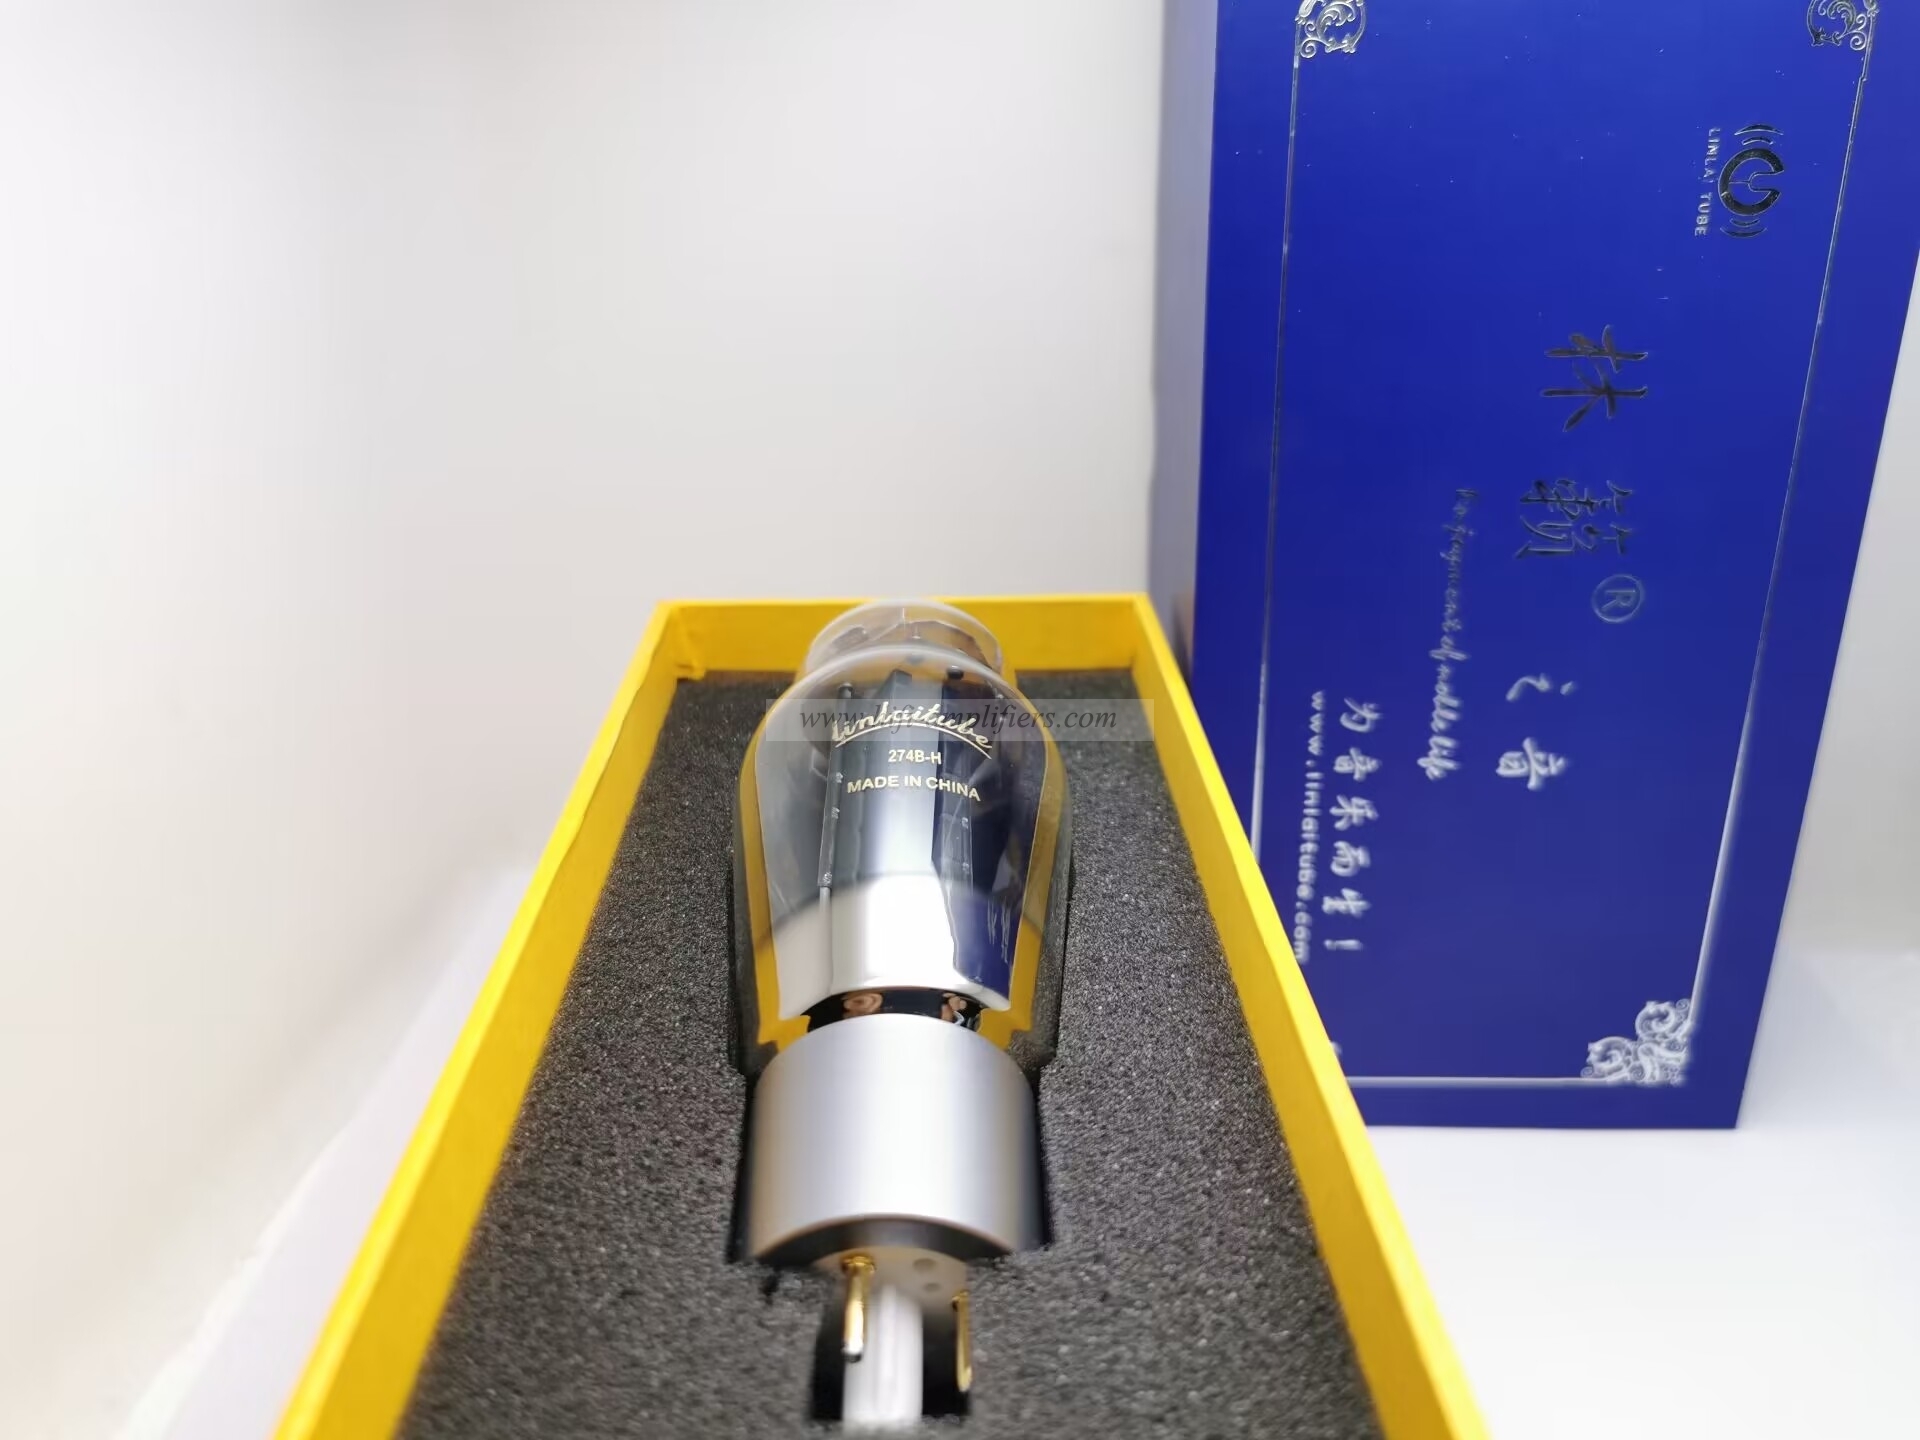 LINLAI 274B-H Hi-end Vacuum Tube Electronic value 1Piece Gift box